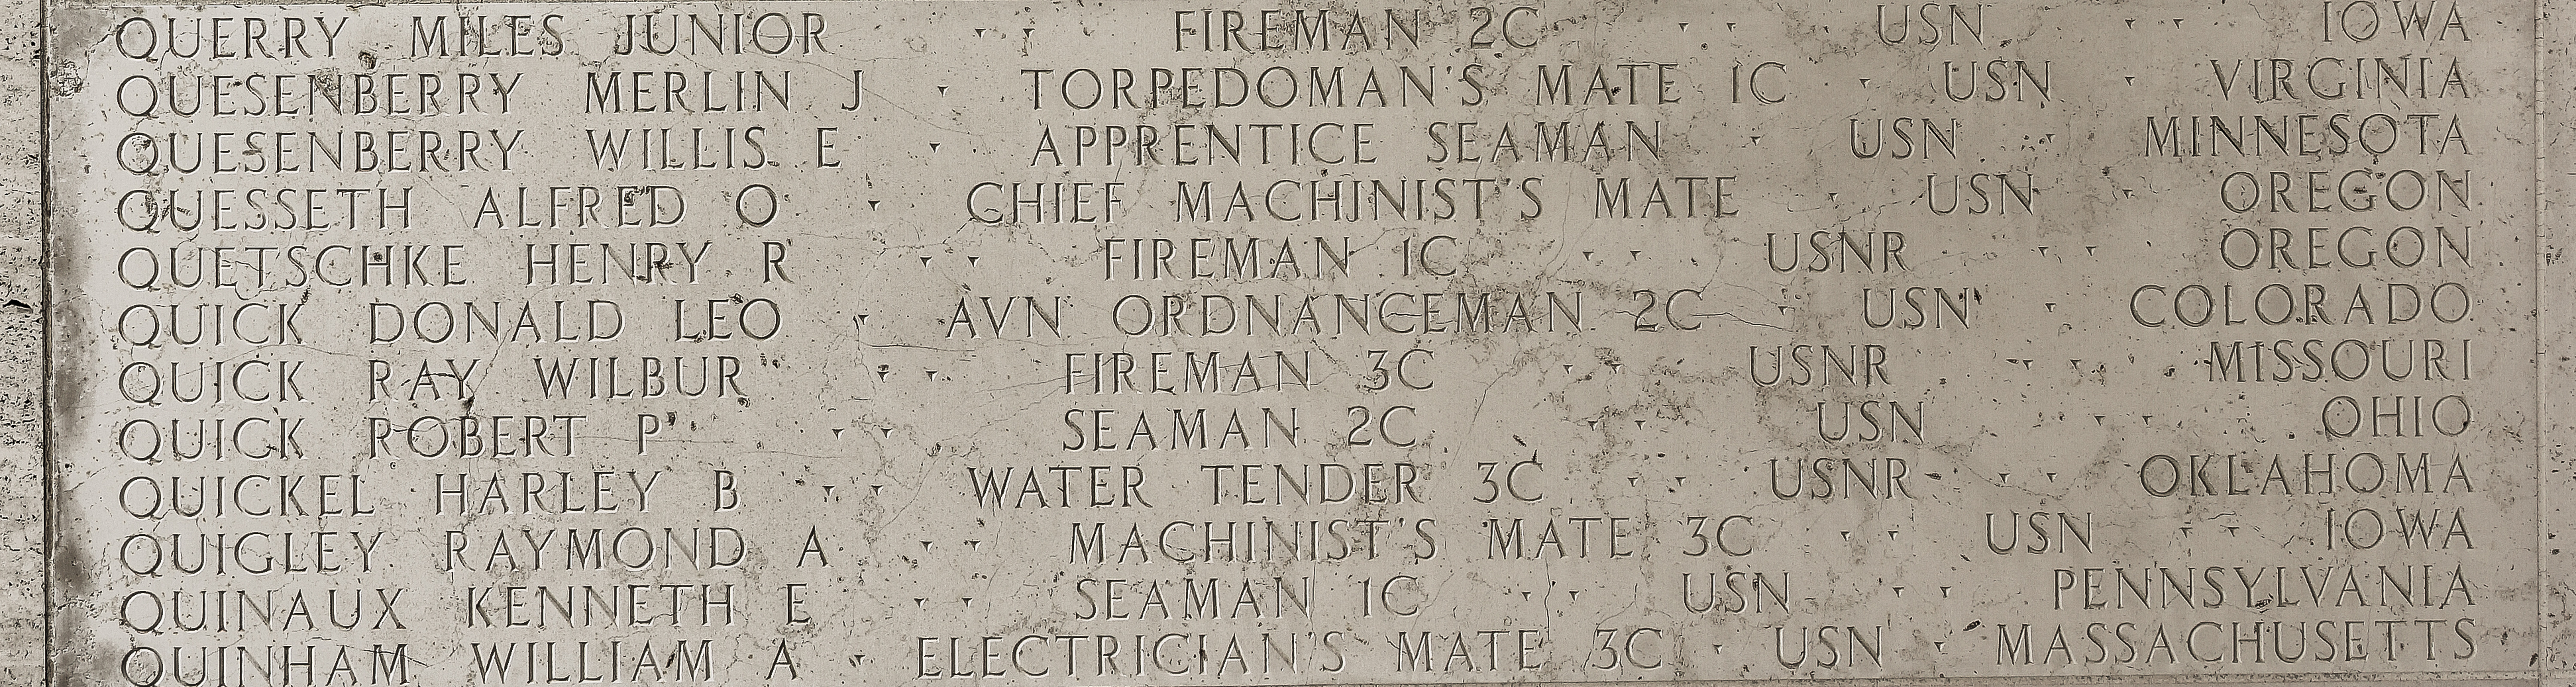 Willis E. Quesenberry, Apprentice Seaman